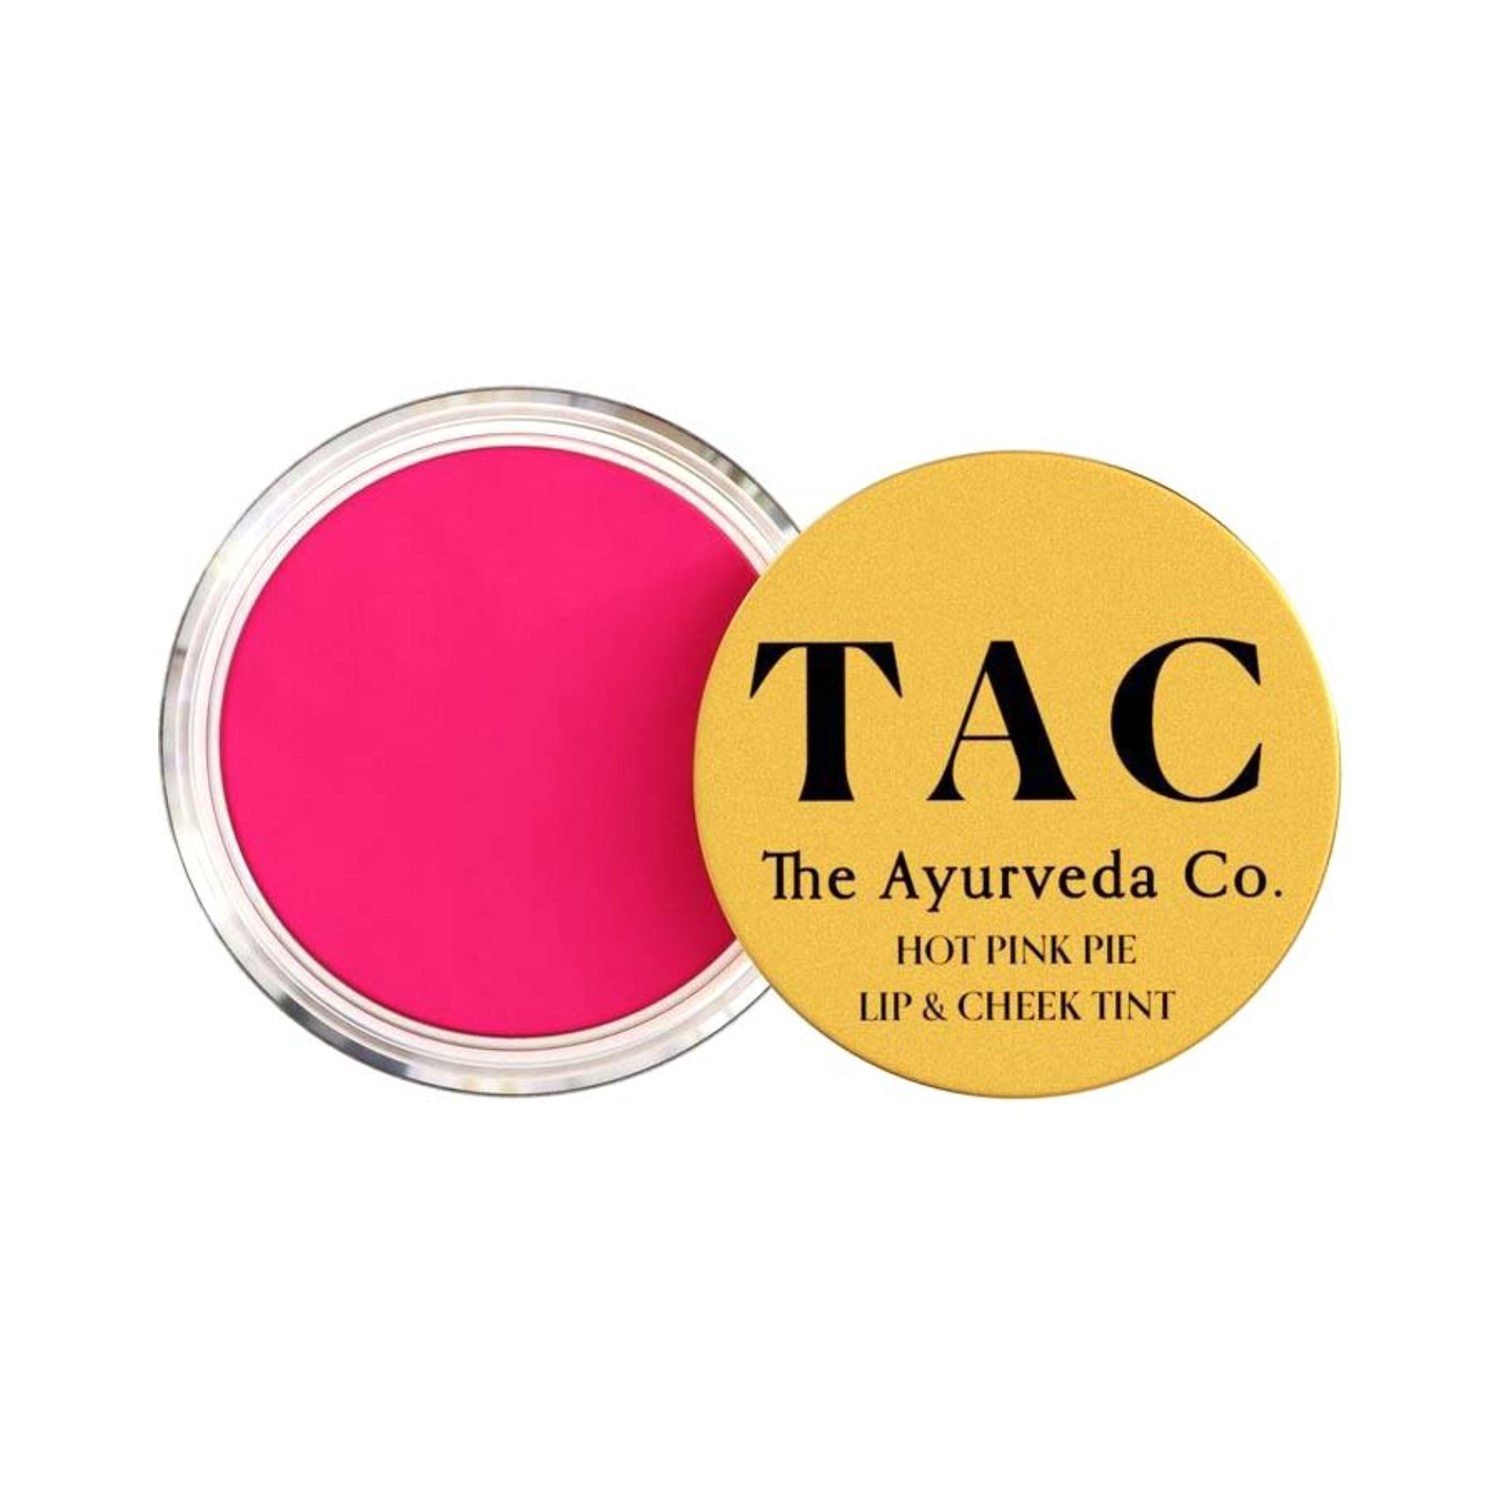 TAC - The Ayurveda Co. Lip & Cheek Tint - Hot Pink Pie (10g)